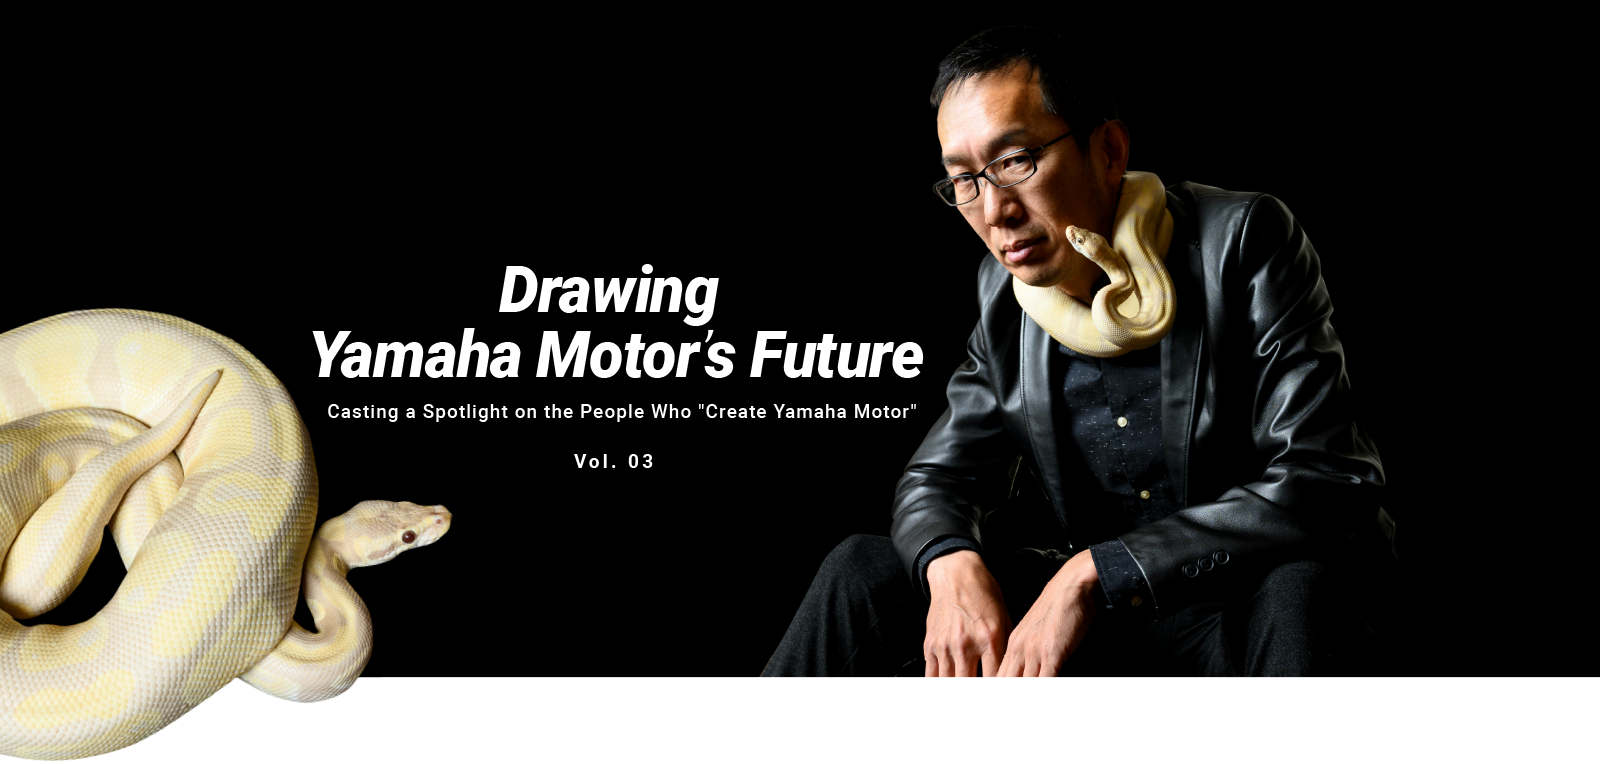 Drawing Yamaha Motor’s Future -Casting a Spotlight on the People Who “Create Yamaha Motor” Vol. 03